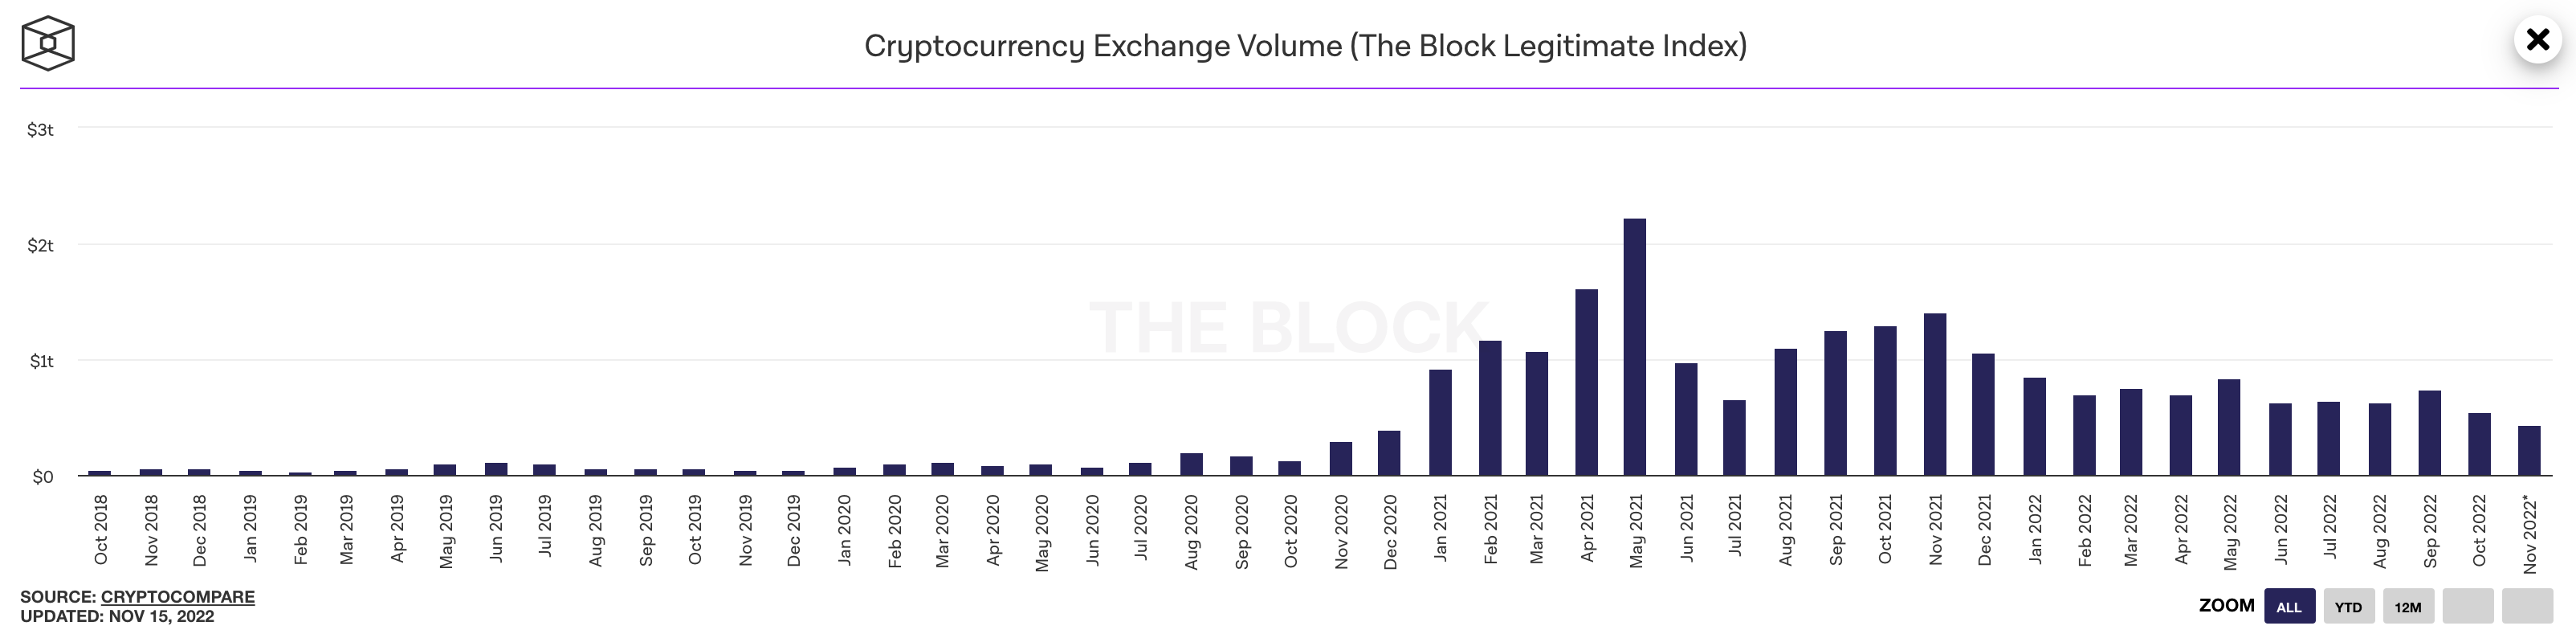 Source: https://www.theblockcrypto.com/data/crypto-markets/spot/cryptocurrency-exchange-volume-monthly